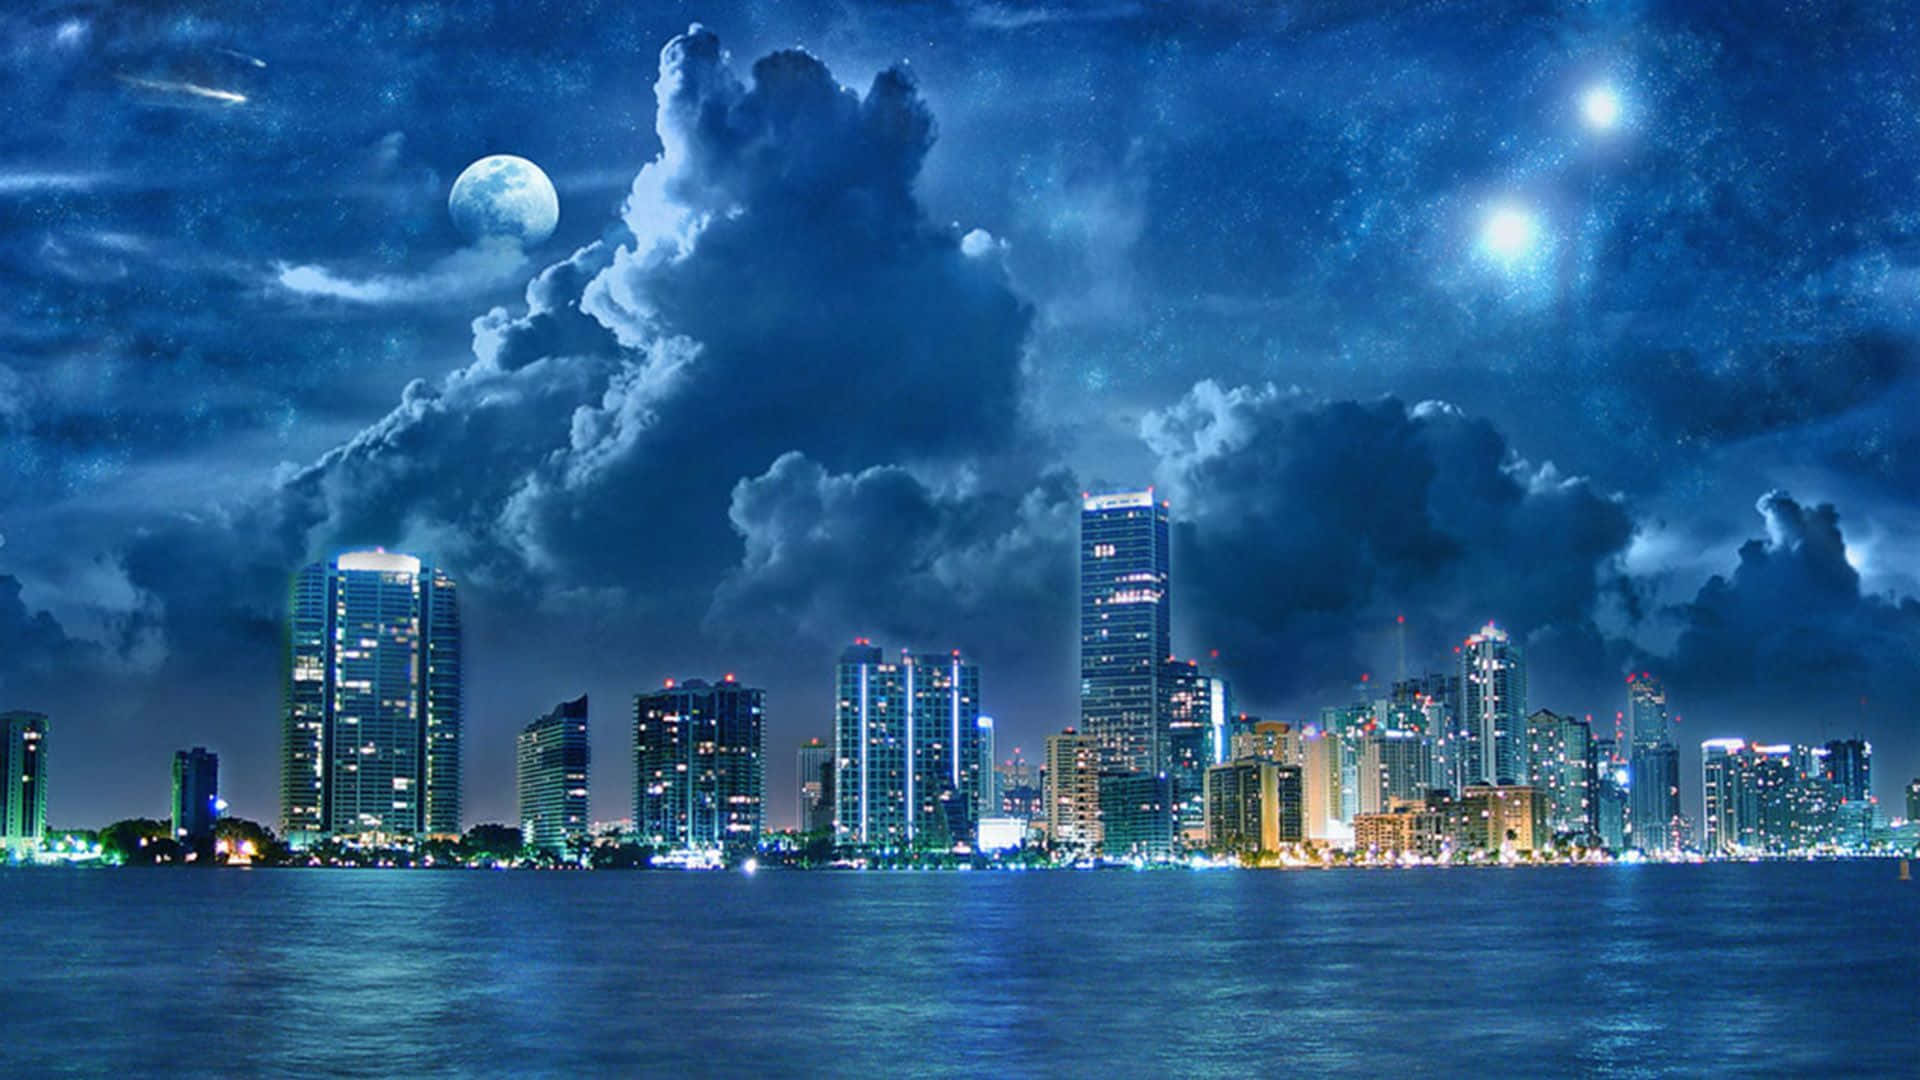 Future City Moon And Stars Desktop Wallpaper